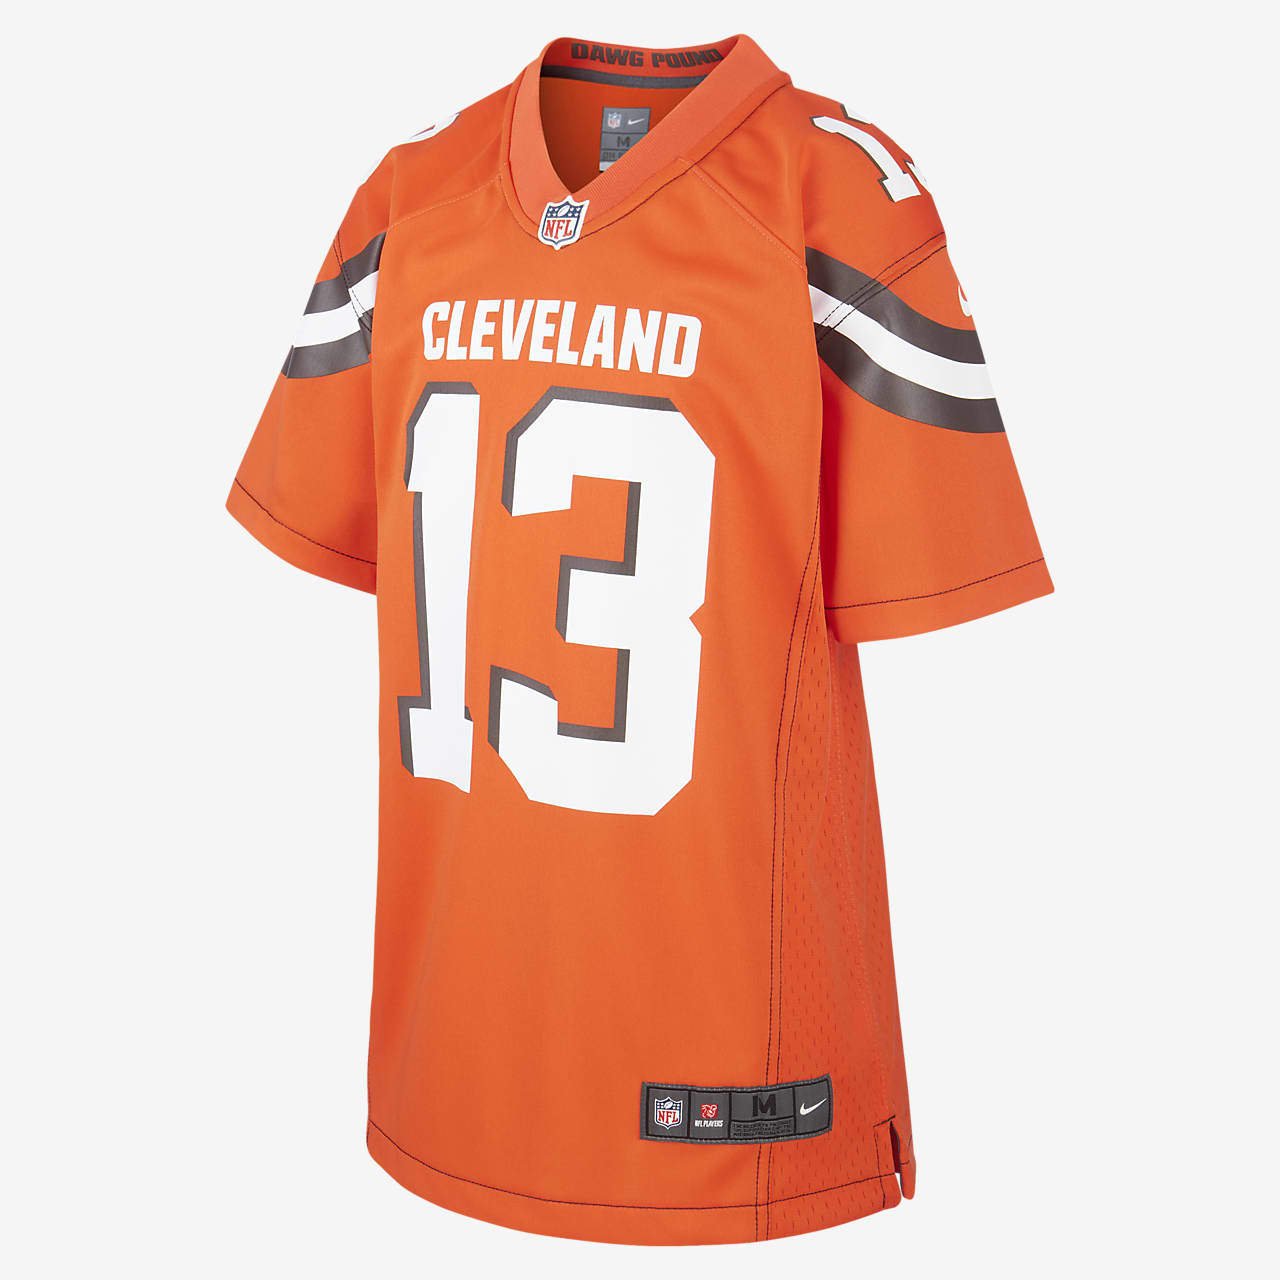 miseria olvidadizo Moviente NFL Cleveland Browns (Odell Beckham Jr.) Camiseta para el partido - Niño/a.  Nike ES